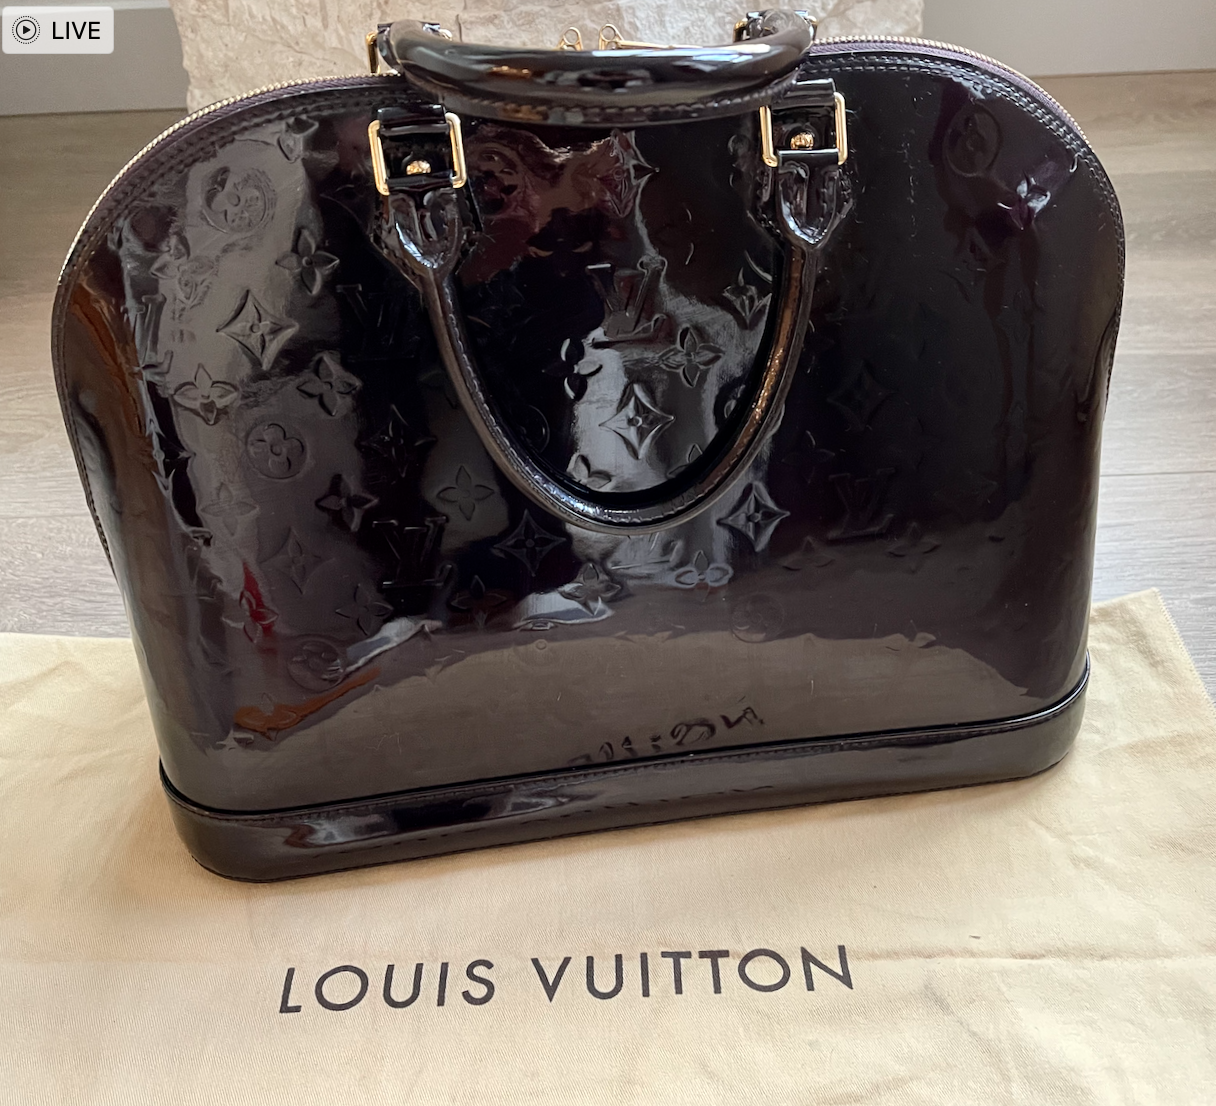 Louis Vuitton Alma Vernis Amarante PM Leather